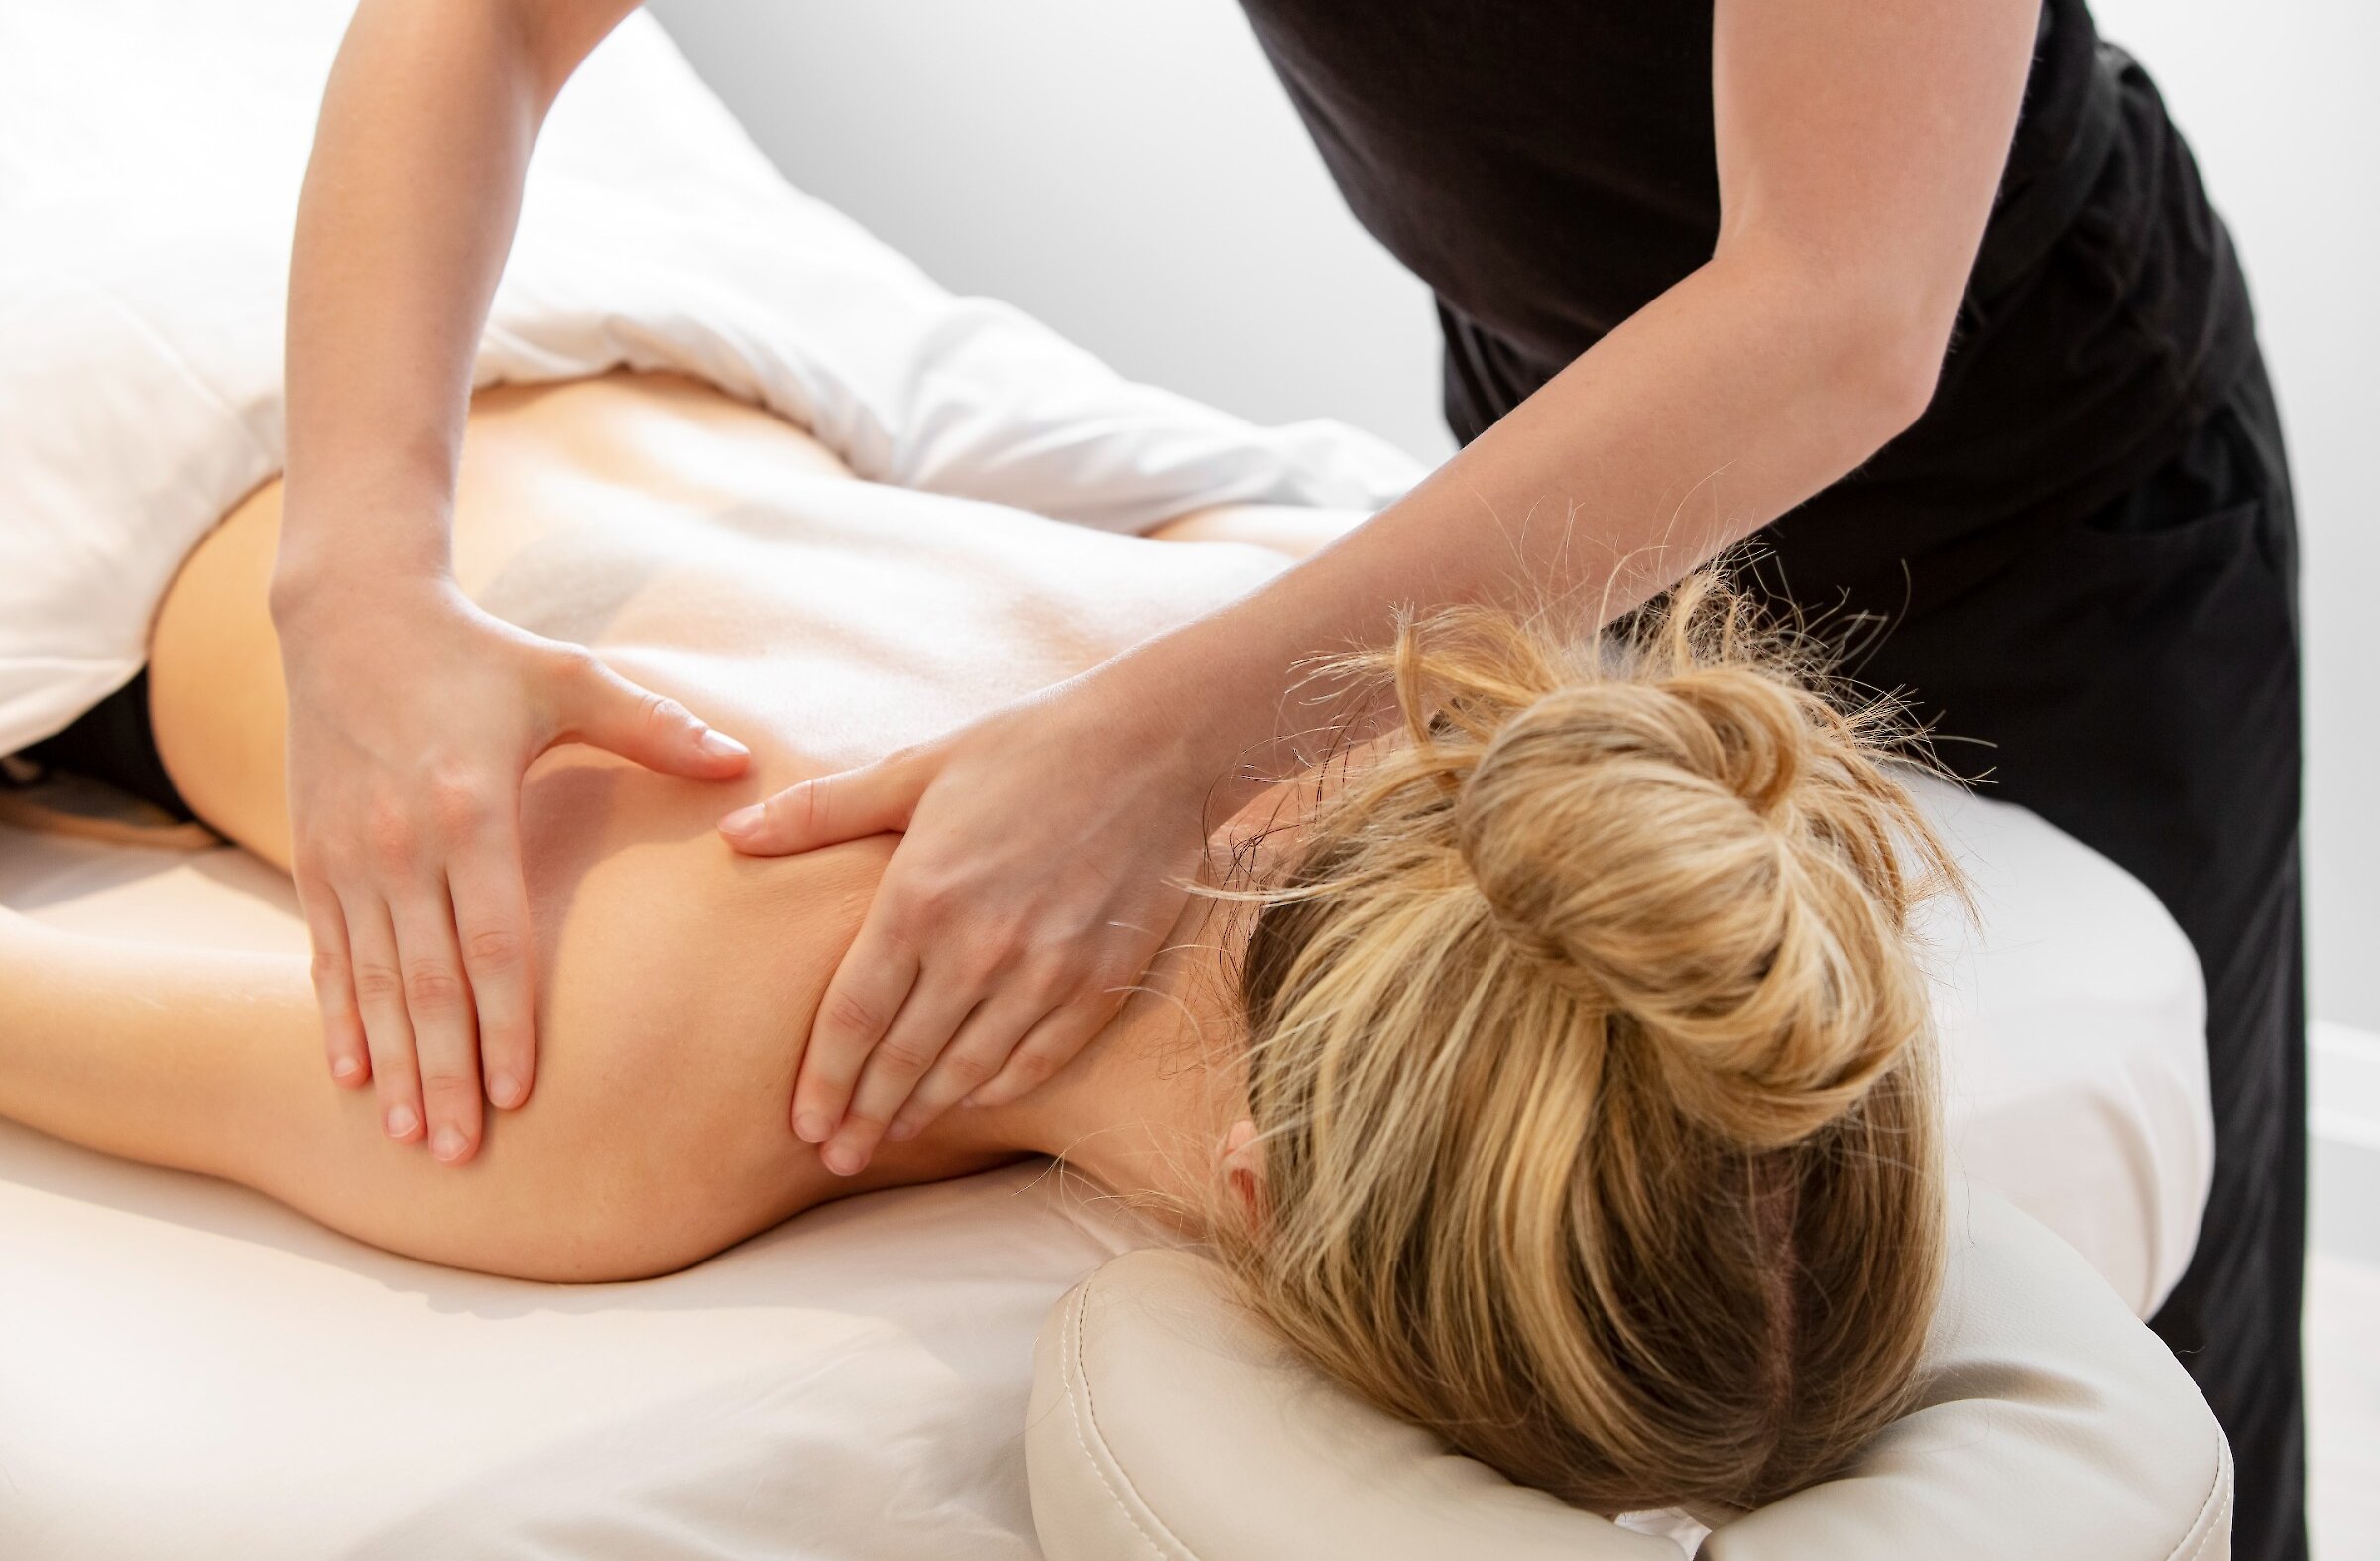 A woman gets a back massage